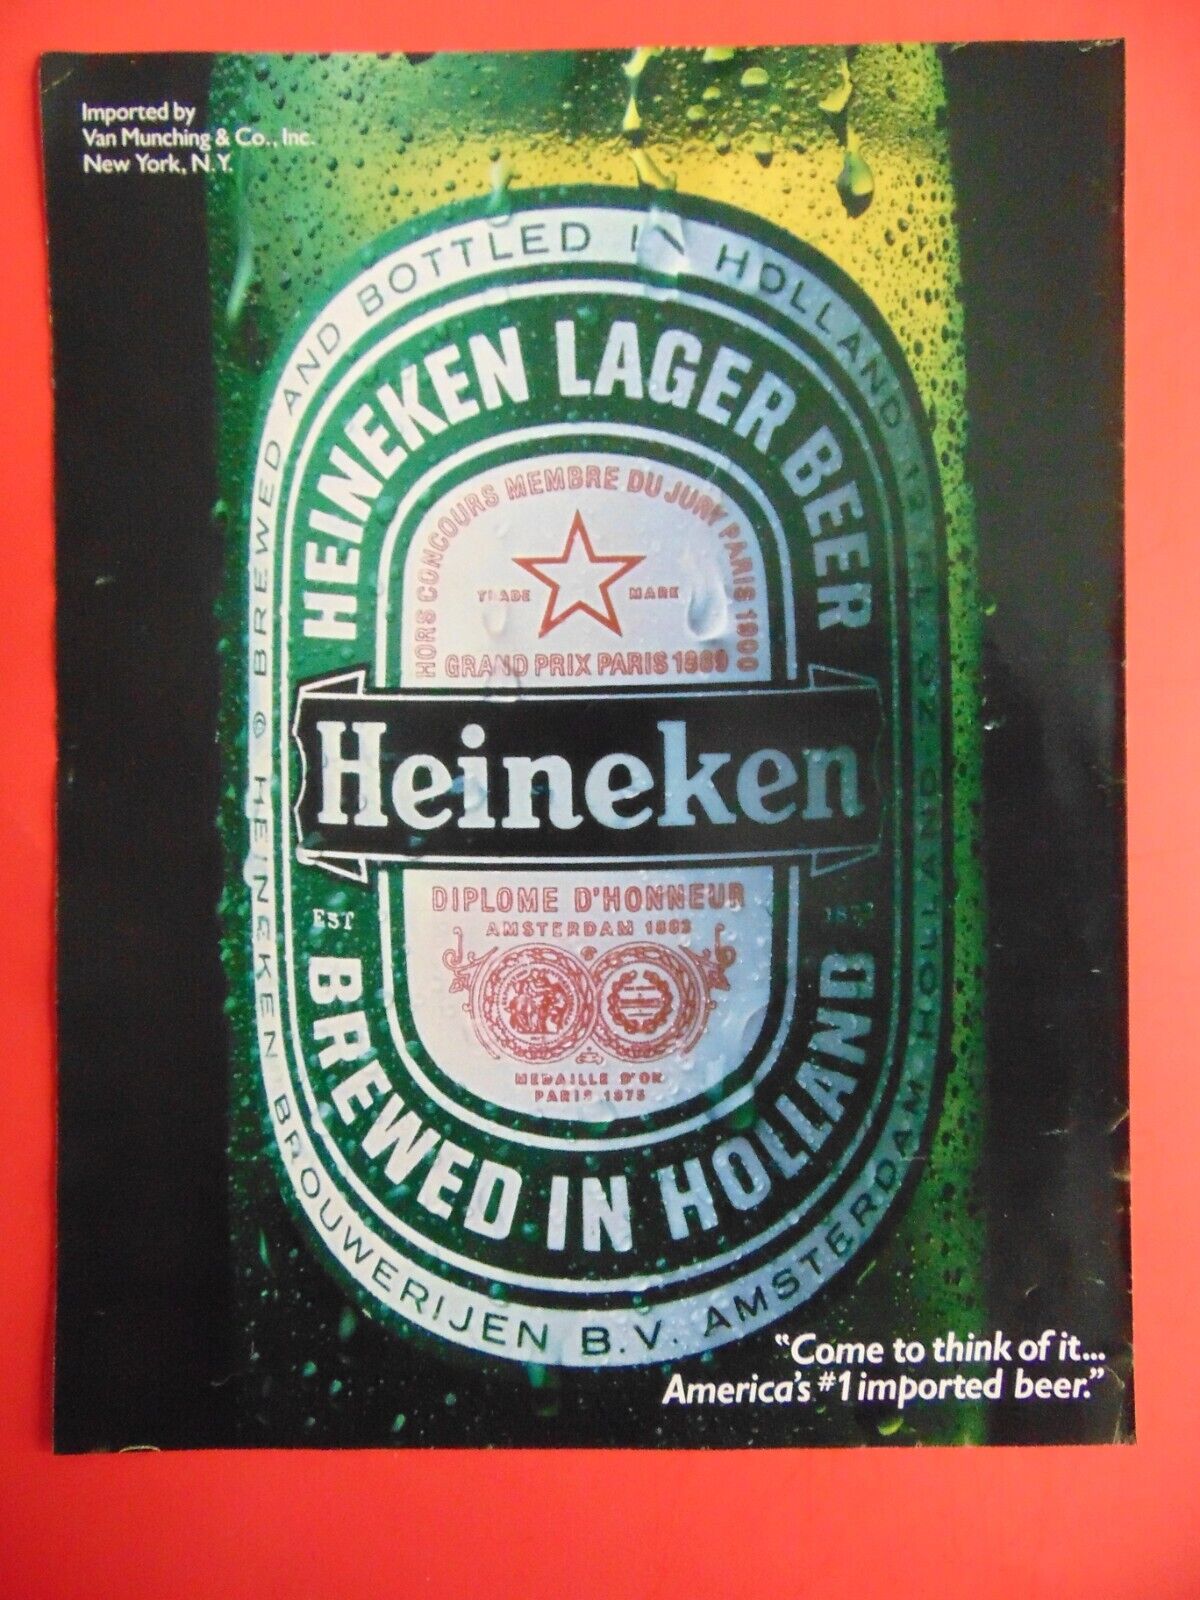 1986 Heineken Lager Beer Big Green Bottle photo art print ad